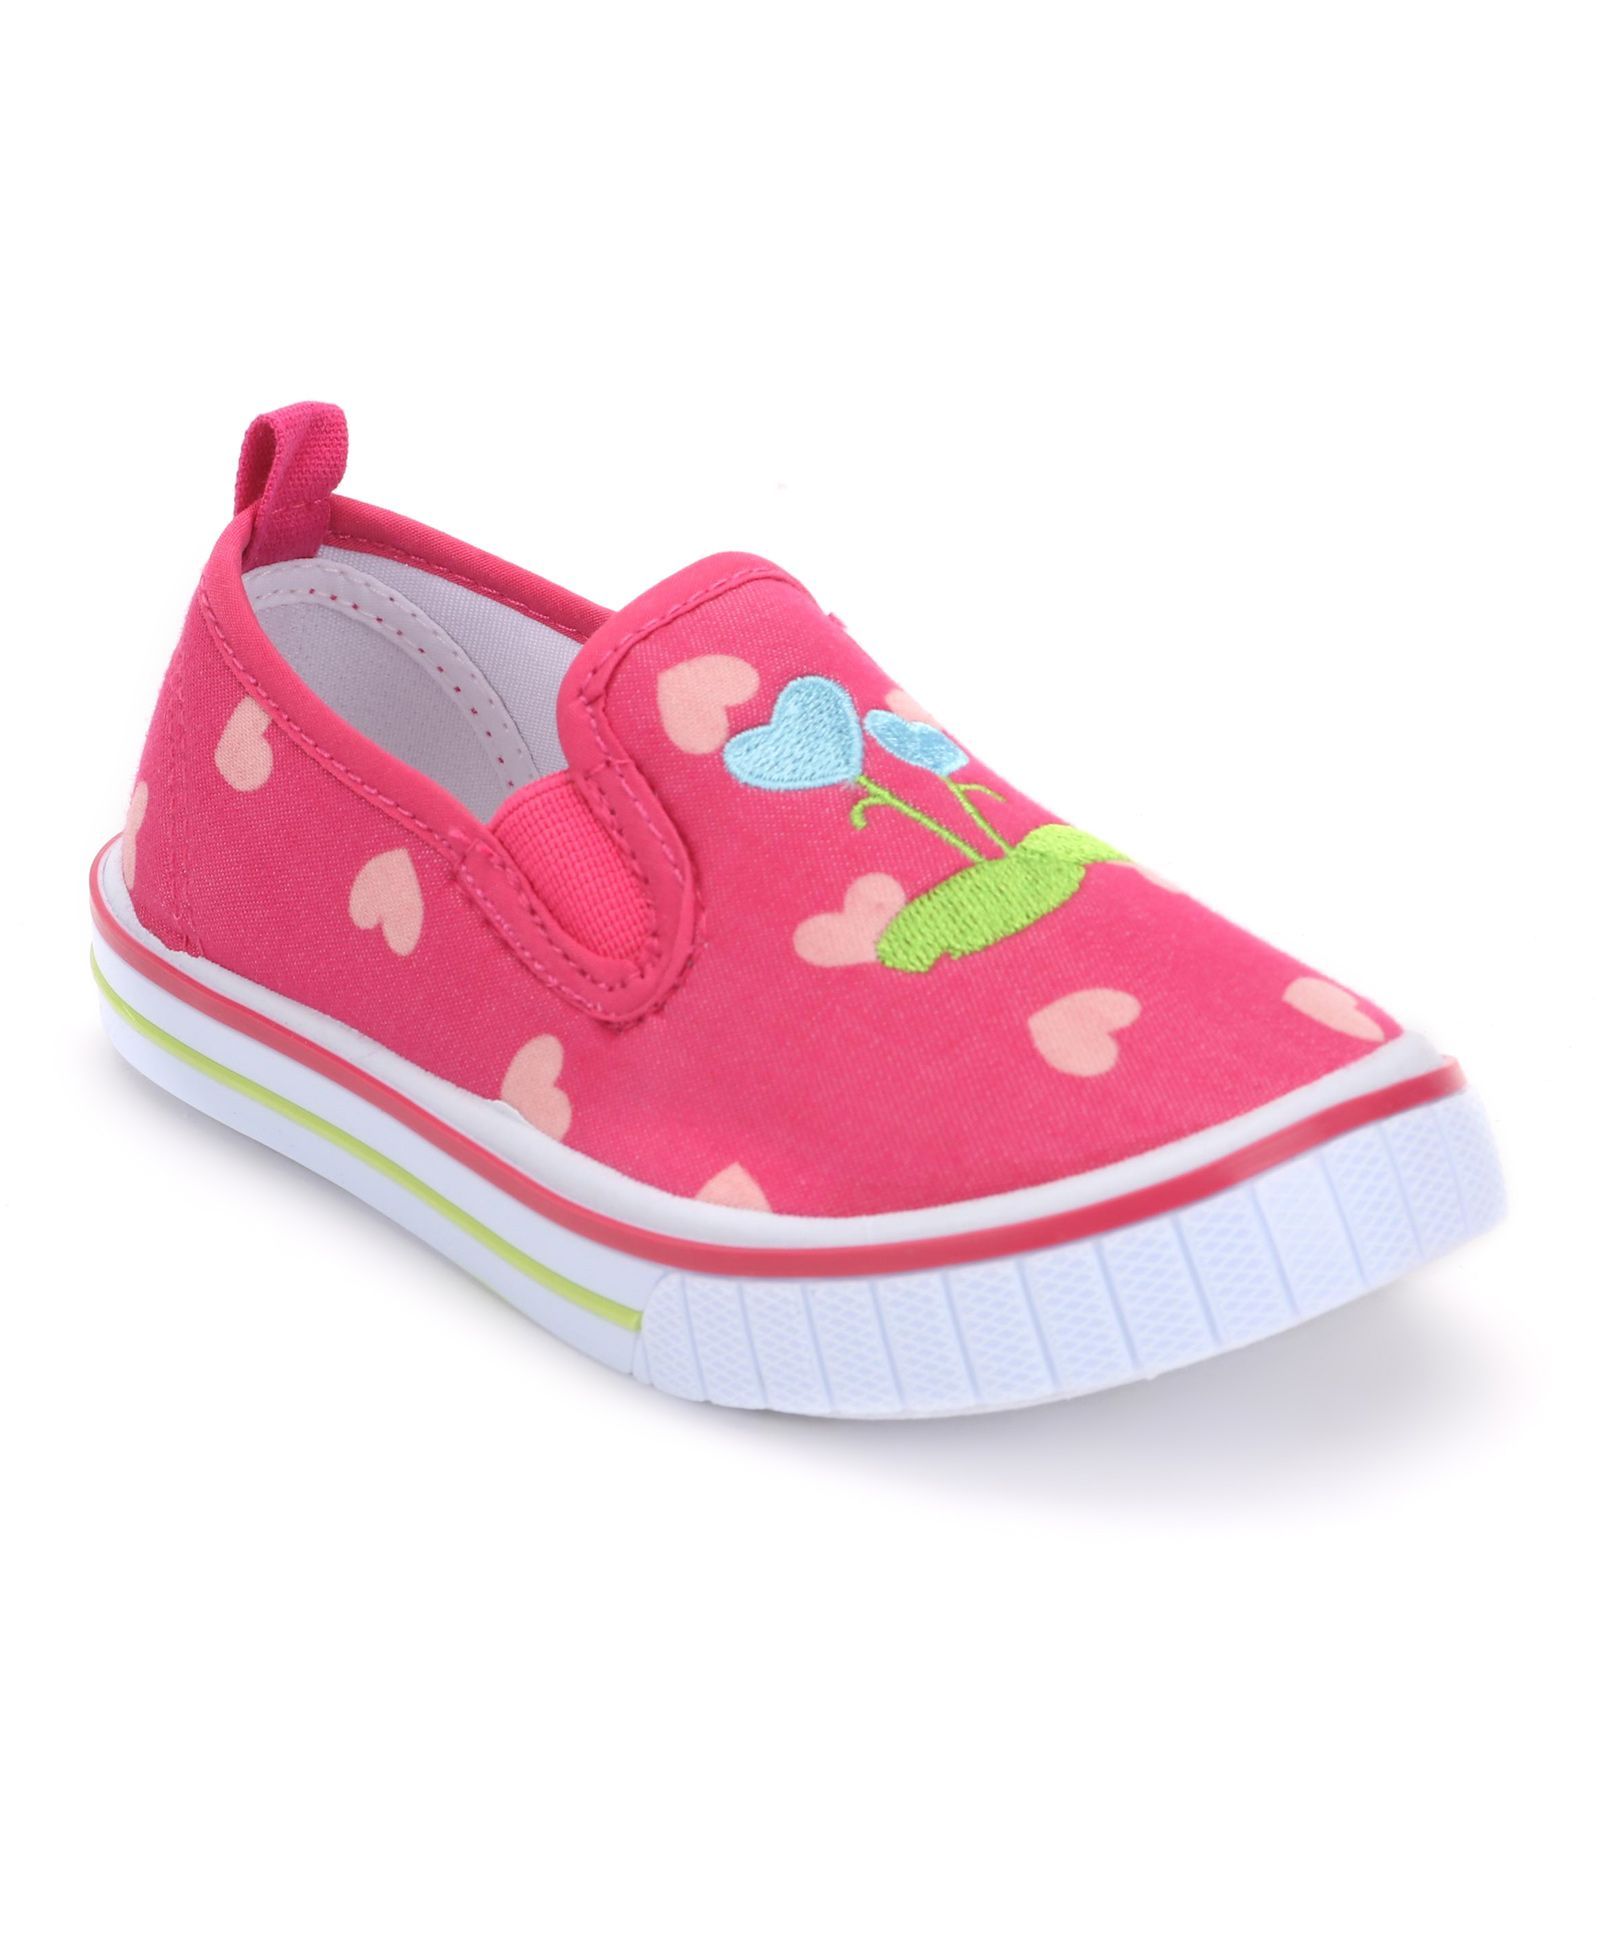 Cute Walk by Babyhug Slip-On Shoes Heart Embroidery - Fuchsia Pink